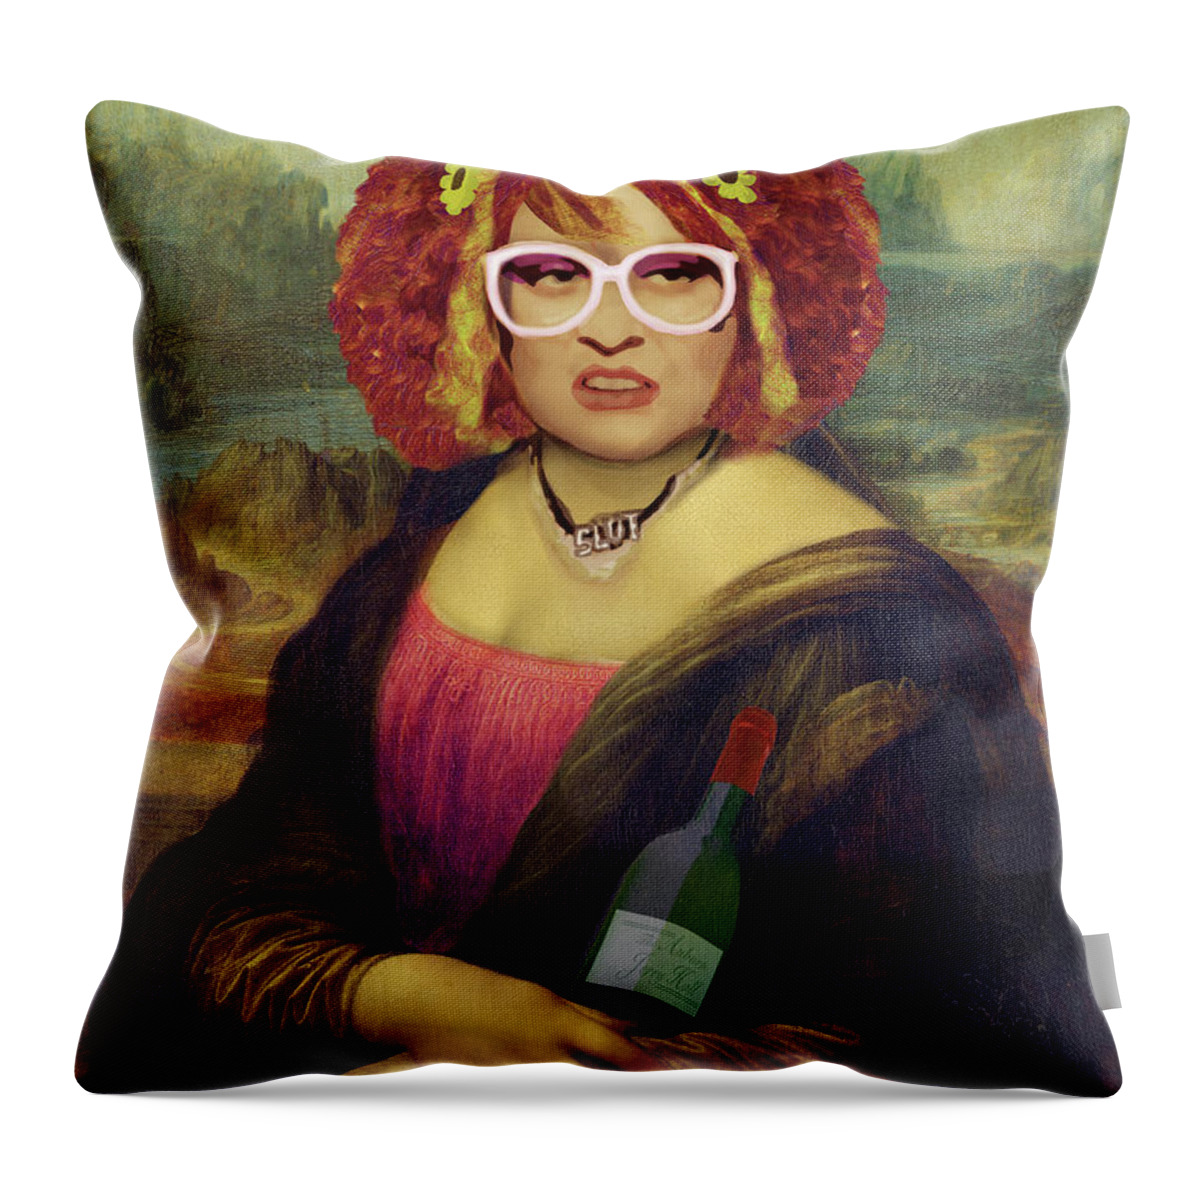 Auburn Throw Pillow featuring the digital art Mona Linda - aka The Auburn Jerry Hall - Gawjuss and Vile by Big Fat Arts